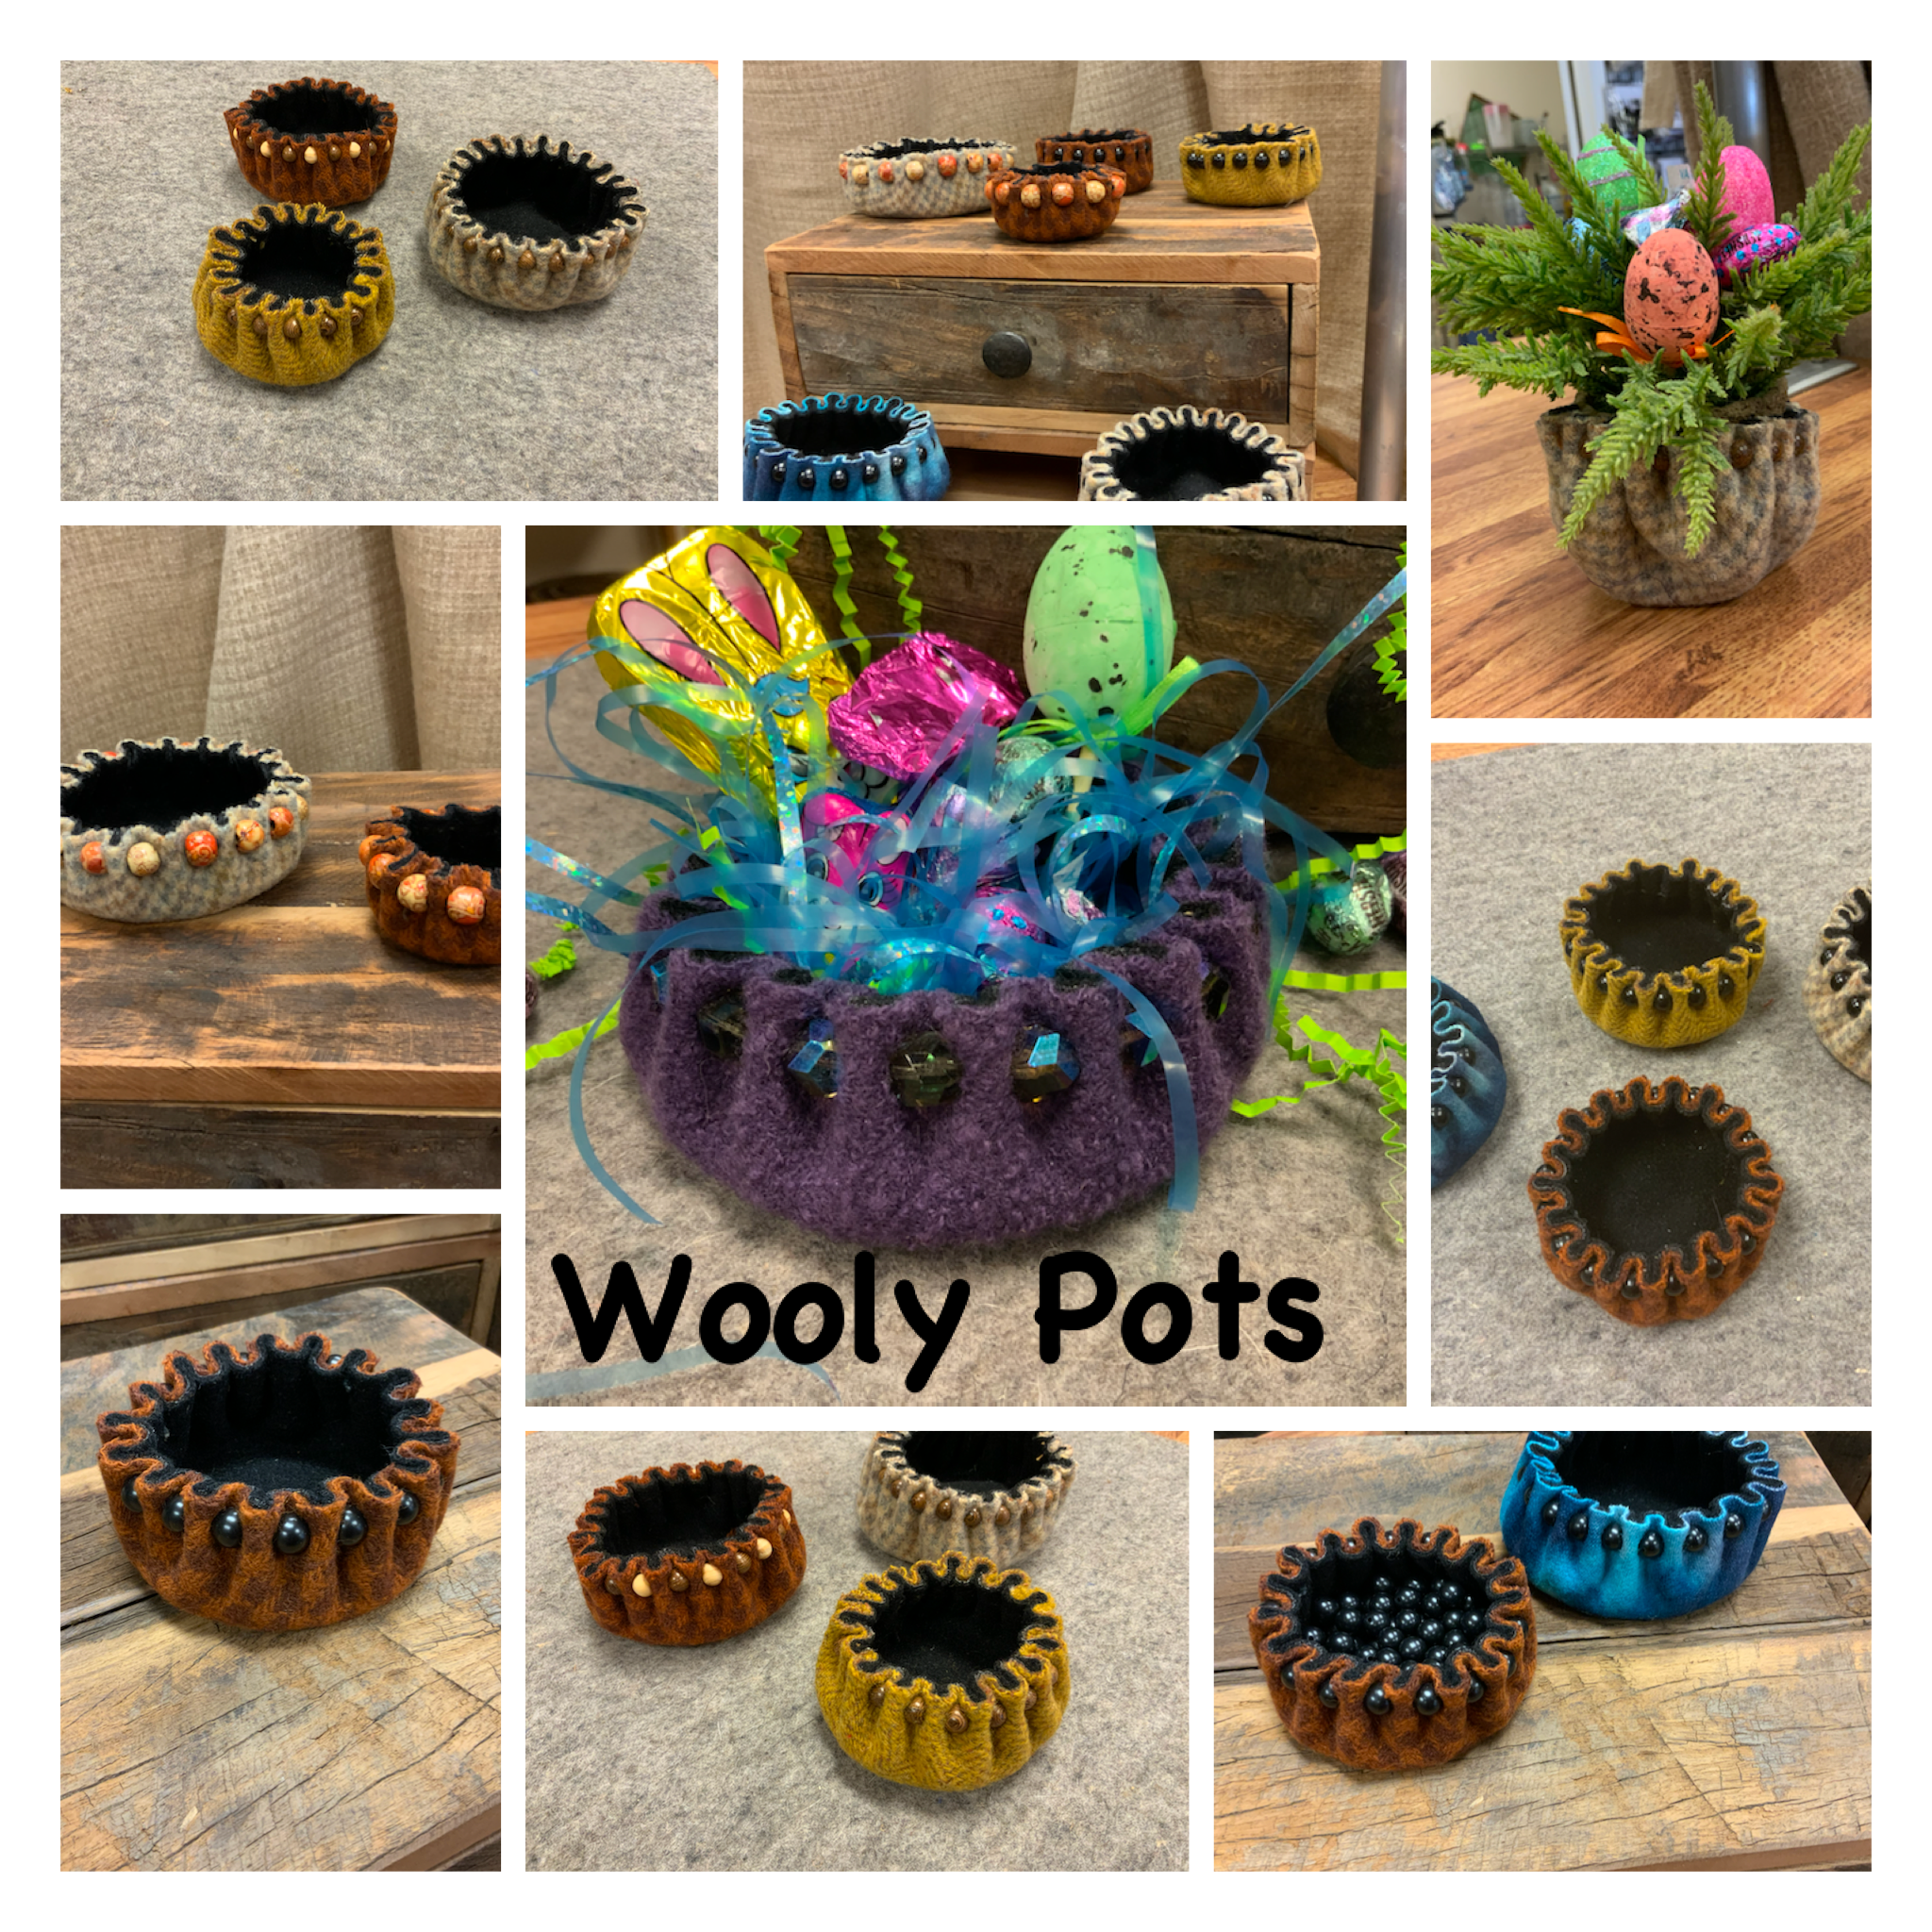 Wooly Pots